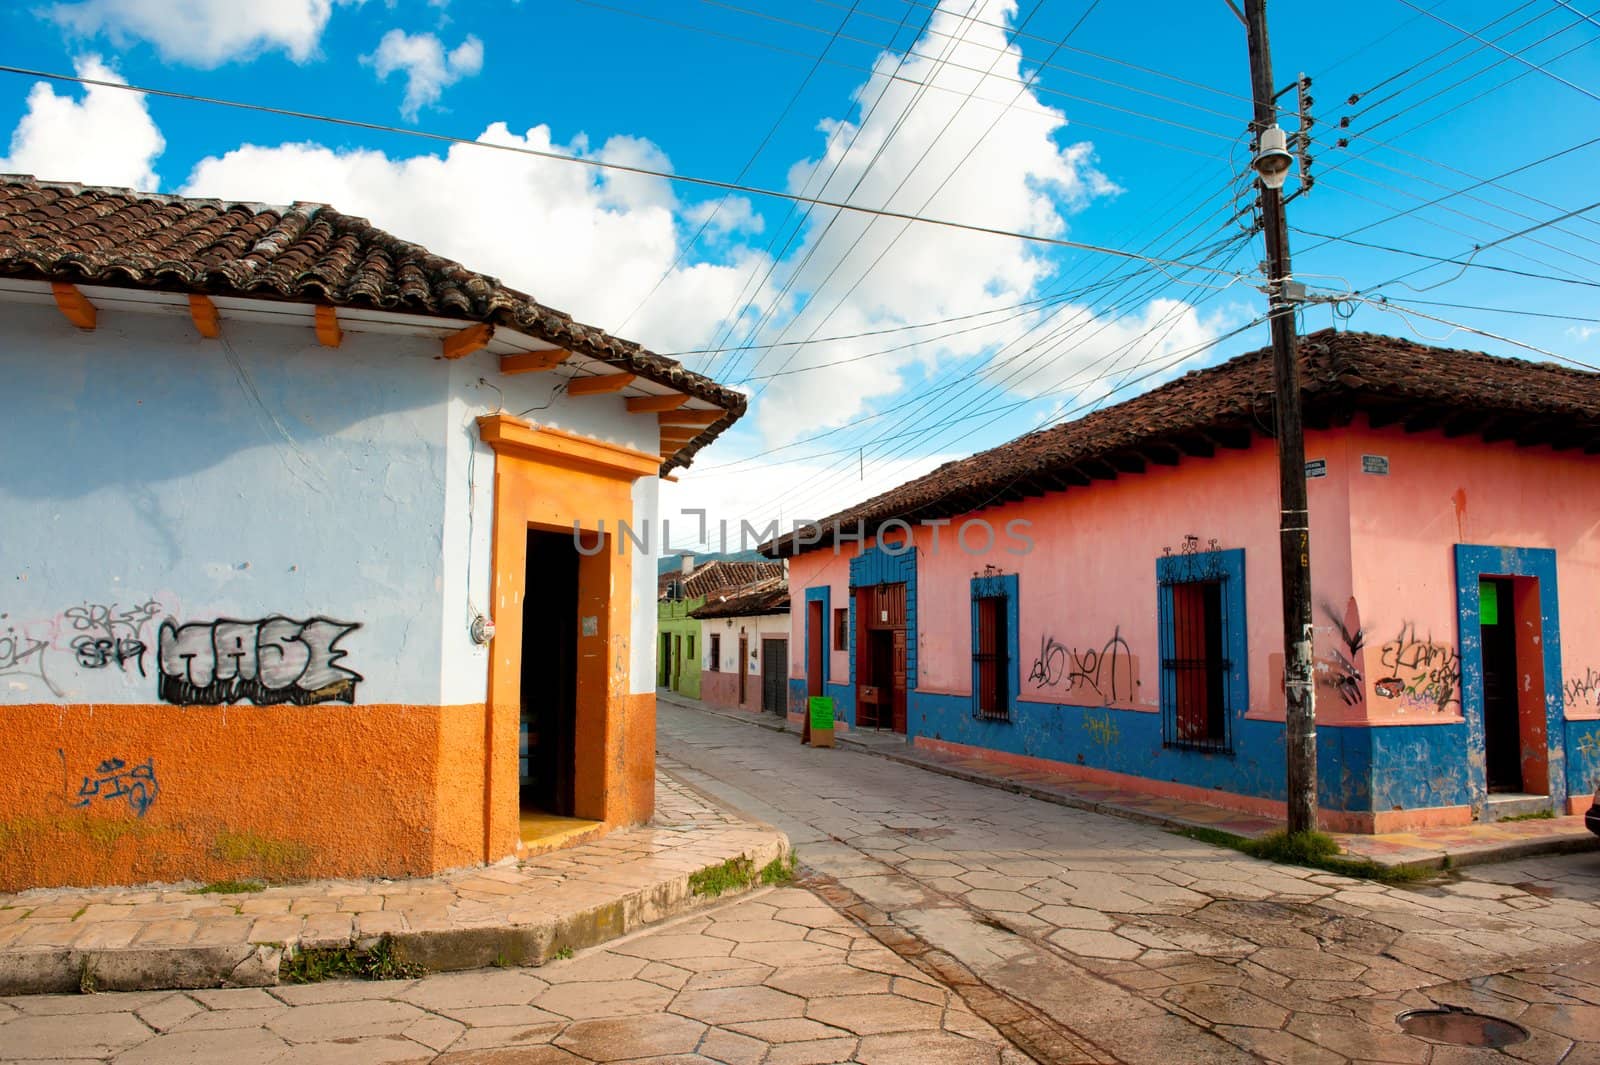 San Cristobal de las Casas, Chiapas, Mexico.